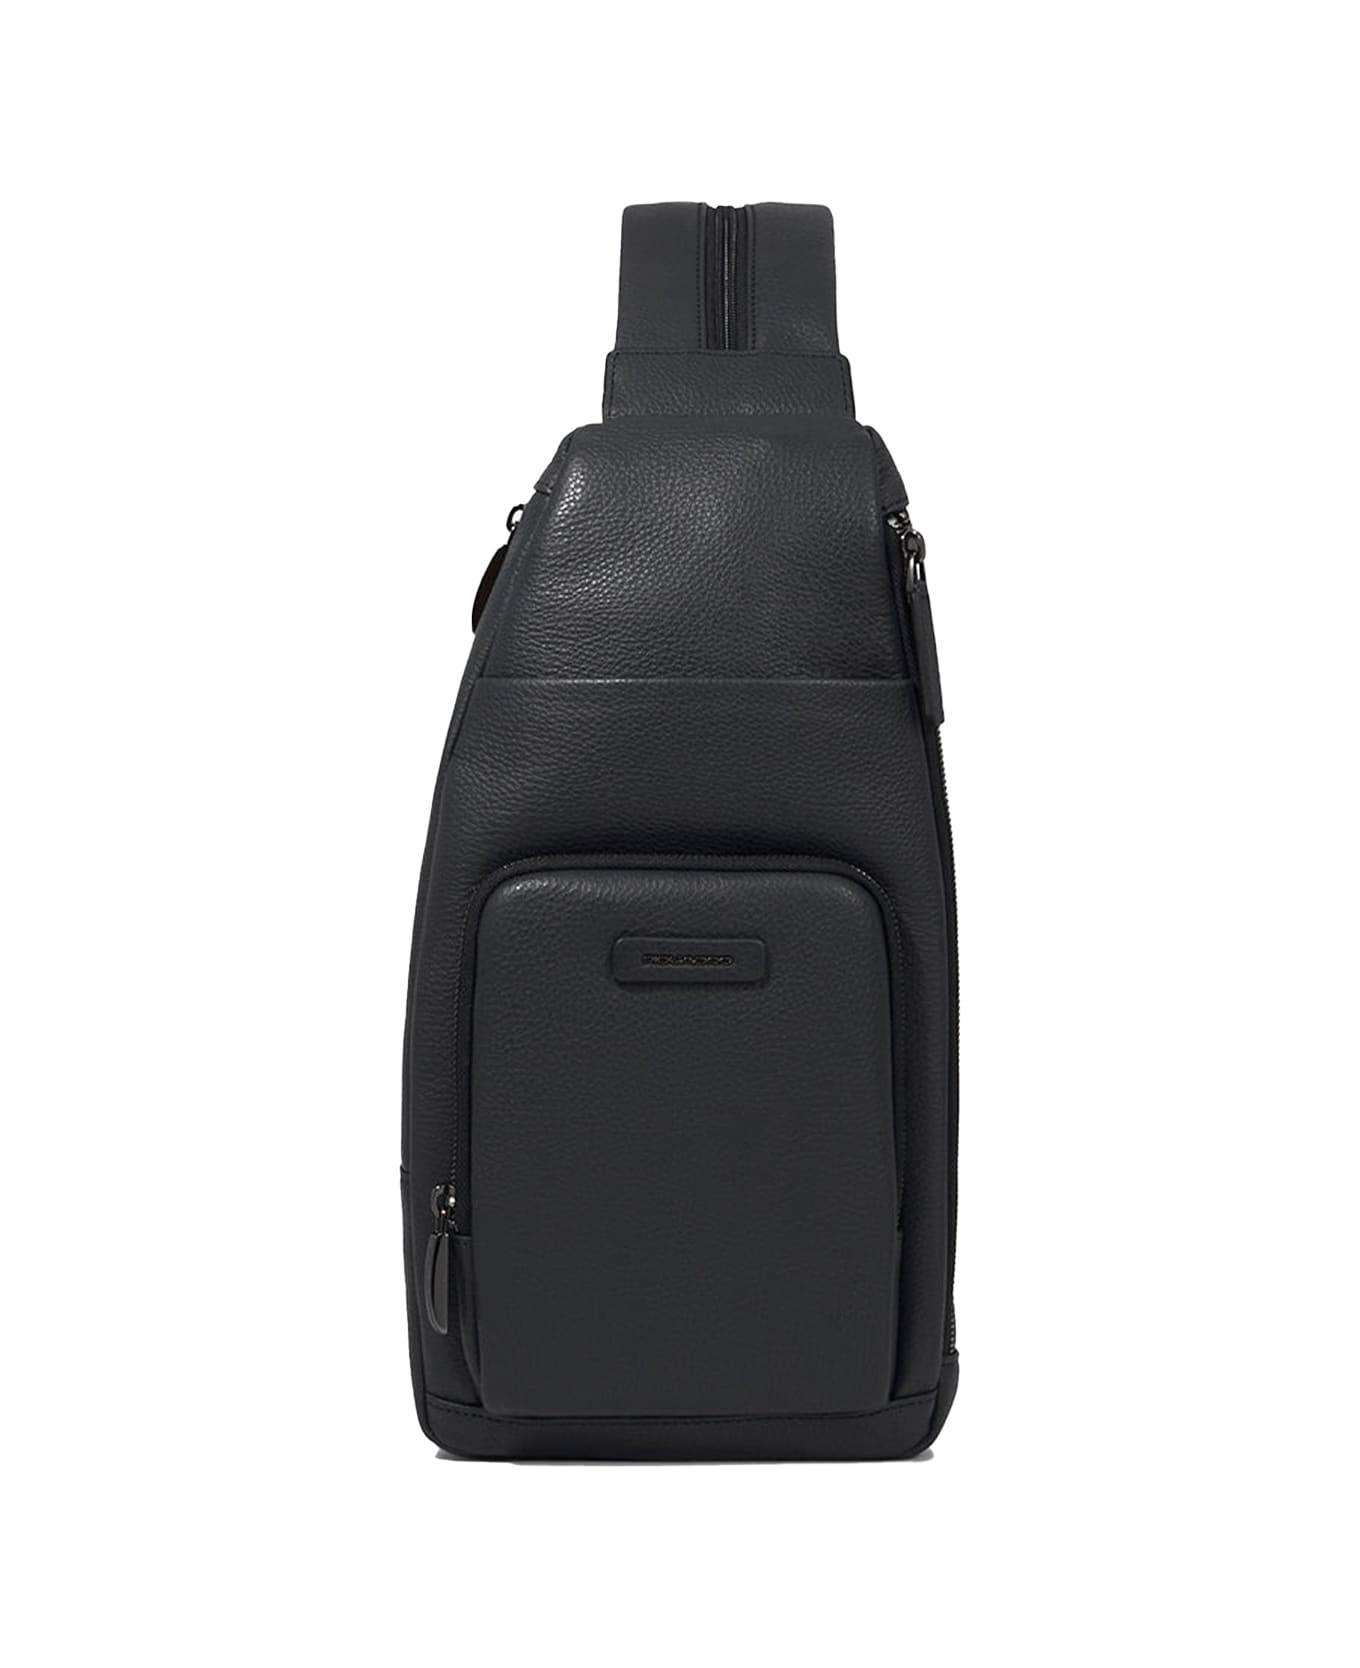 Piquadro Shoulder Bag For Ipad Mini, Portable As A Backpack - NERO ベルトバッグ